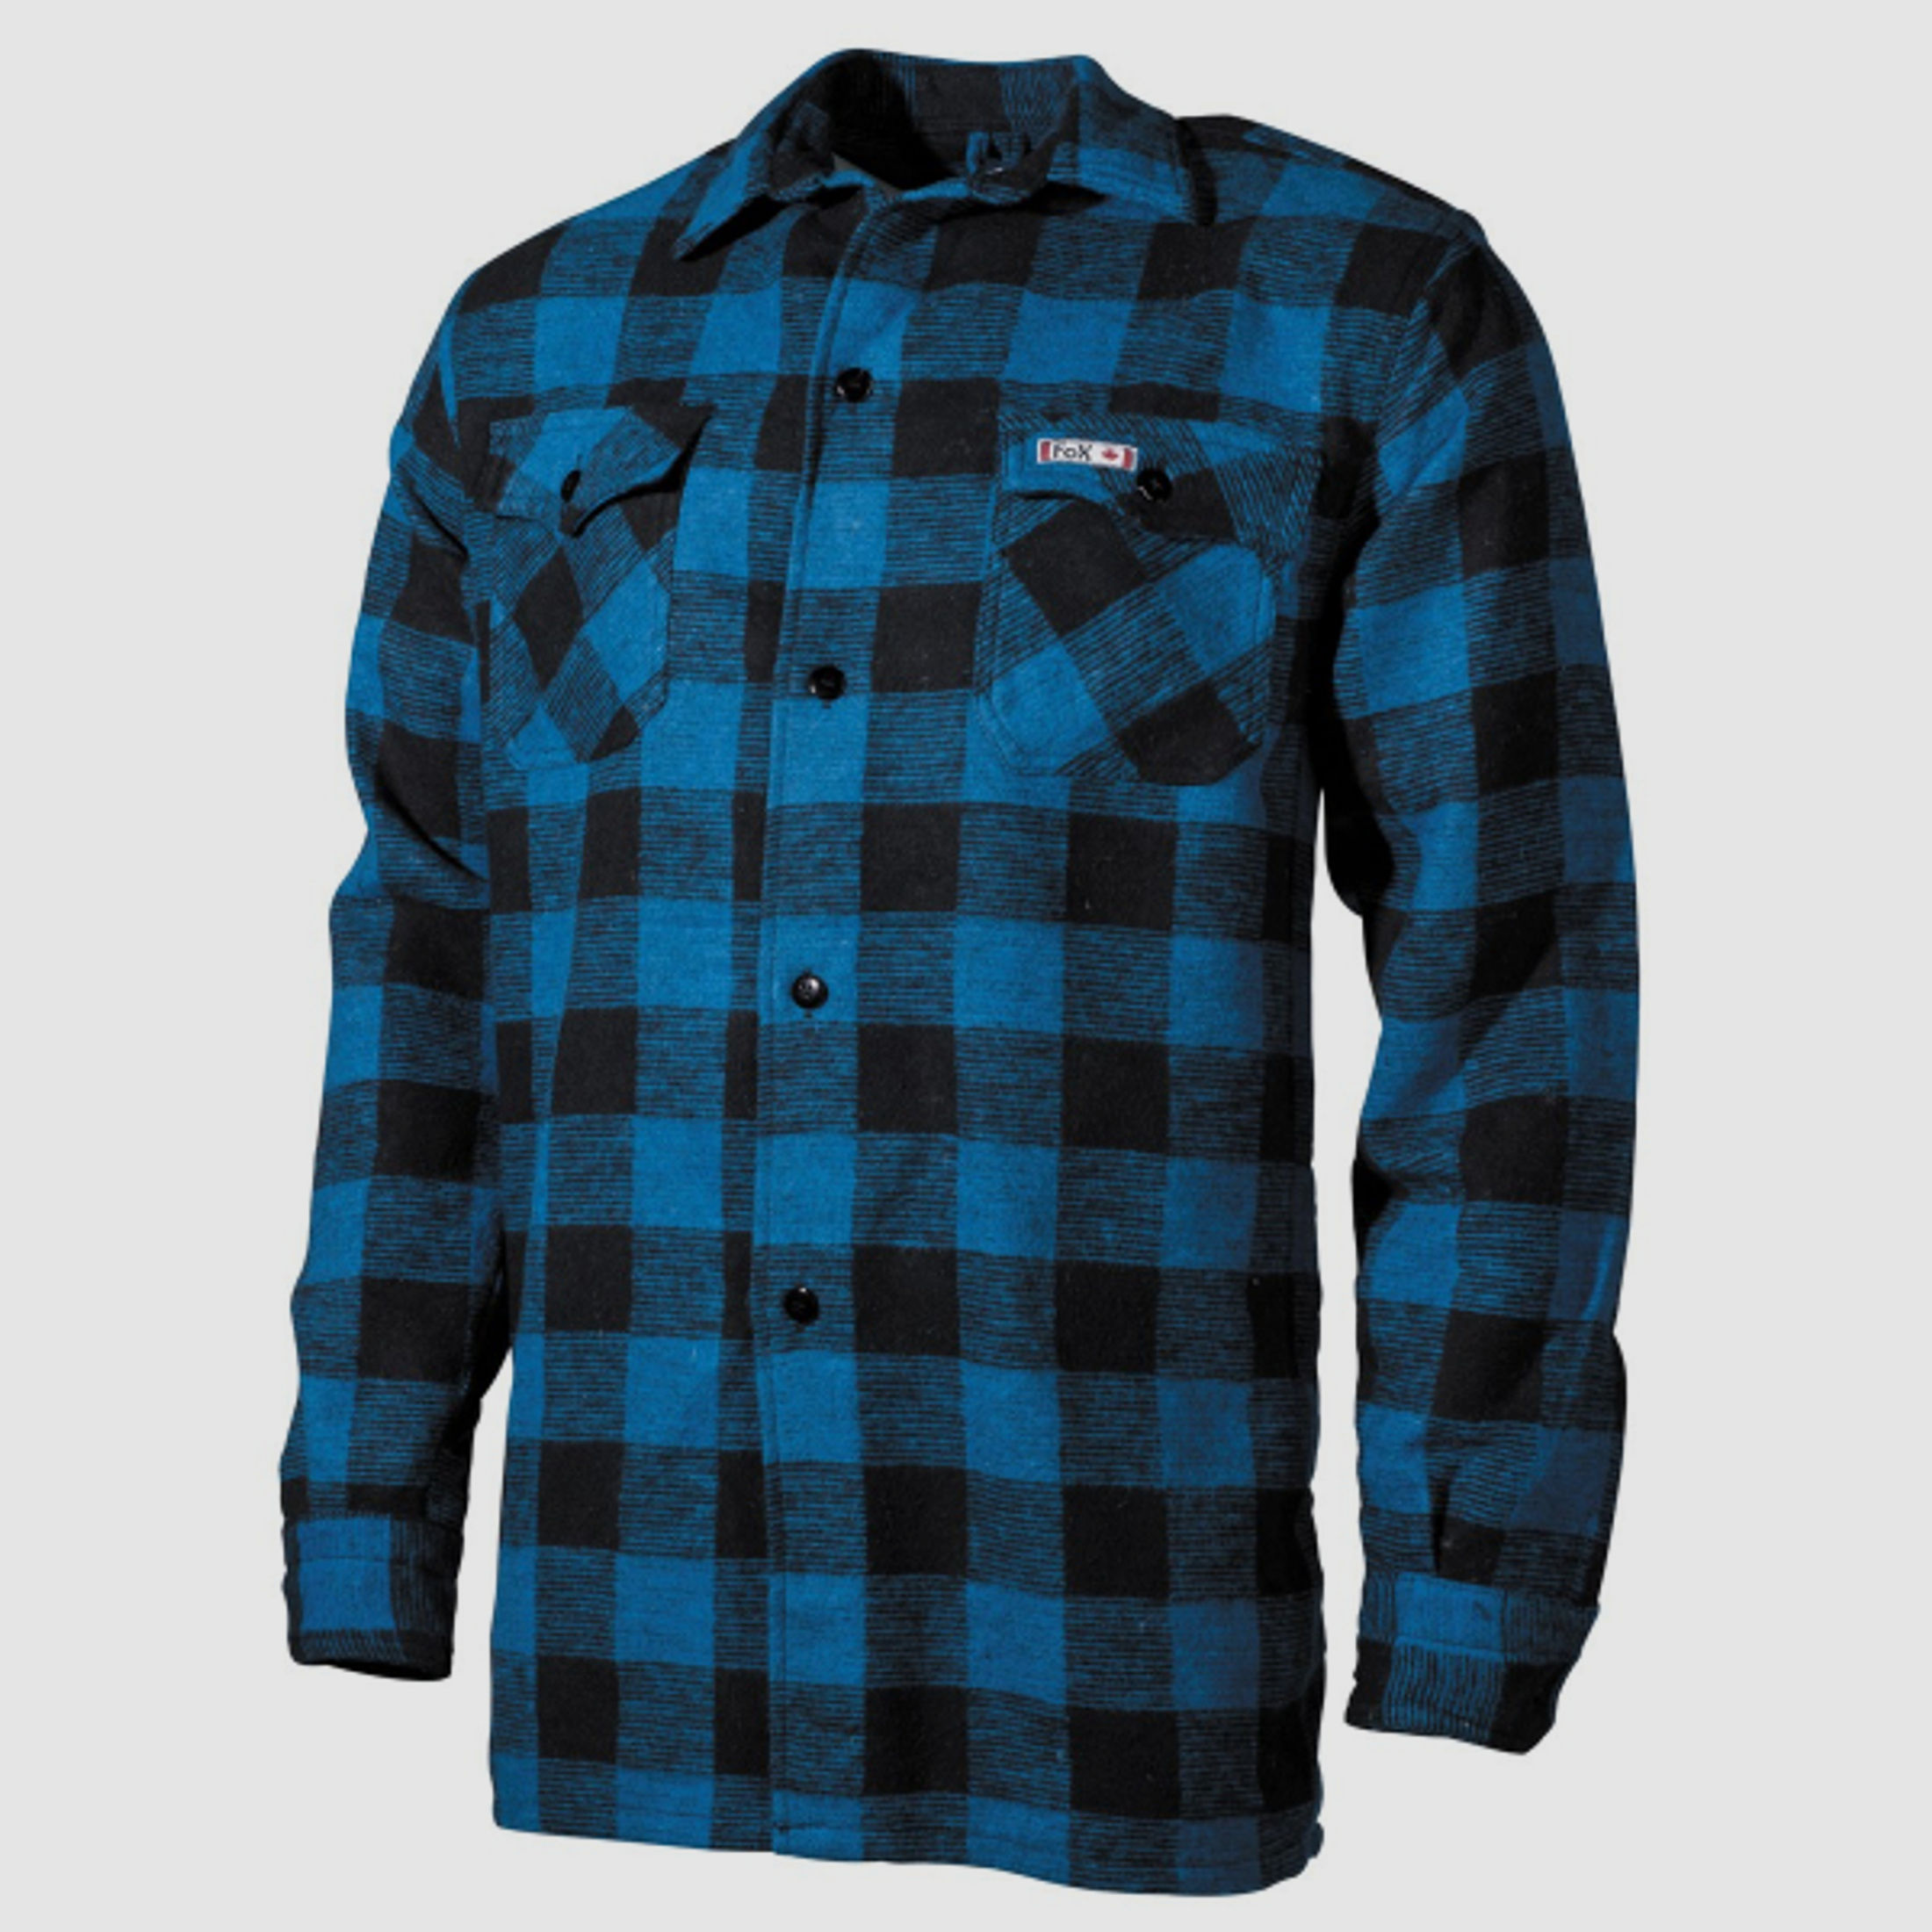 Holzfällerhemd Gr. M (Medium) Blau - Schwarz / Karohemd / Flanellhemd